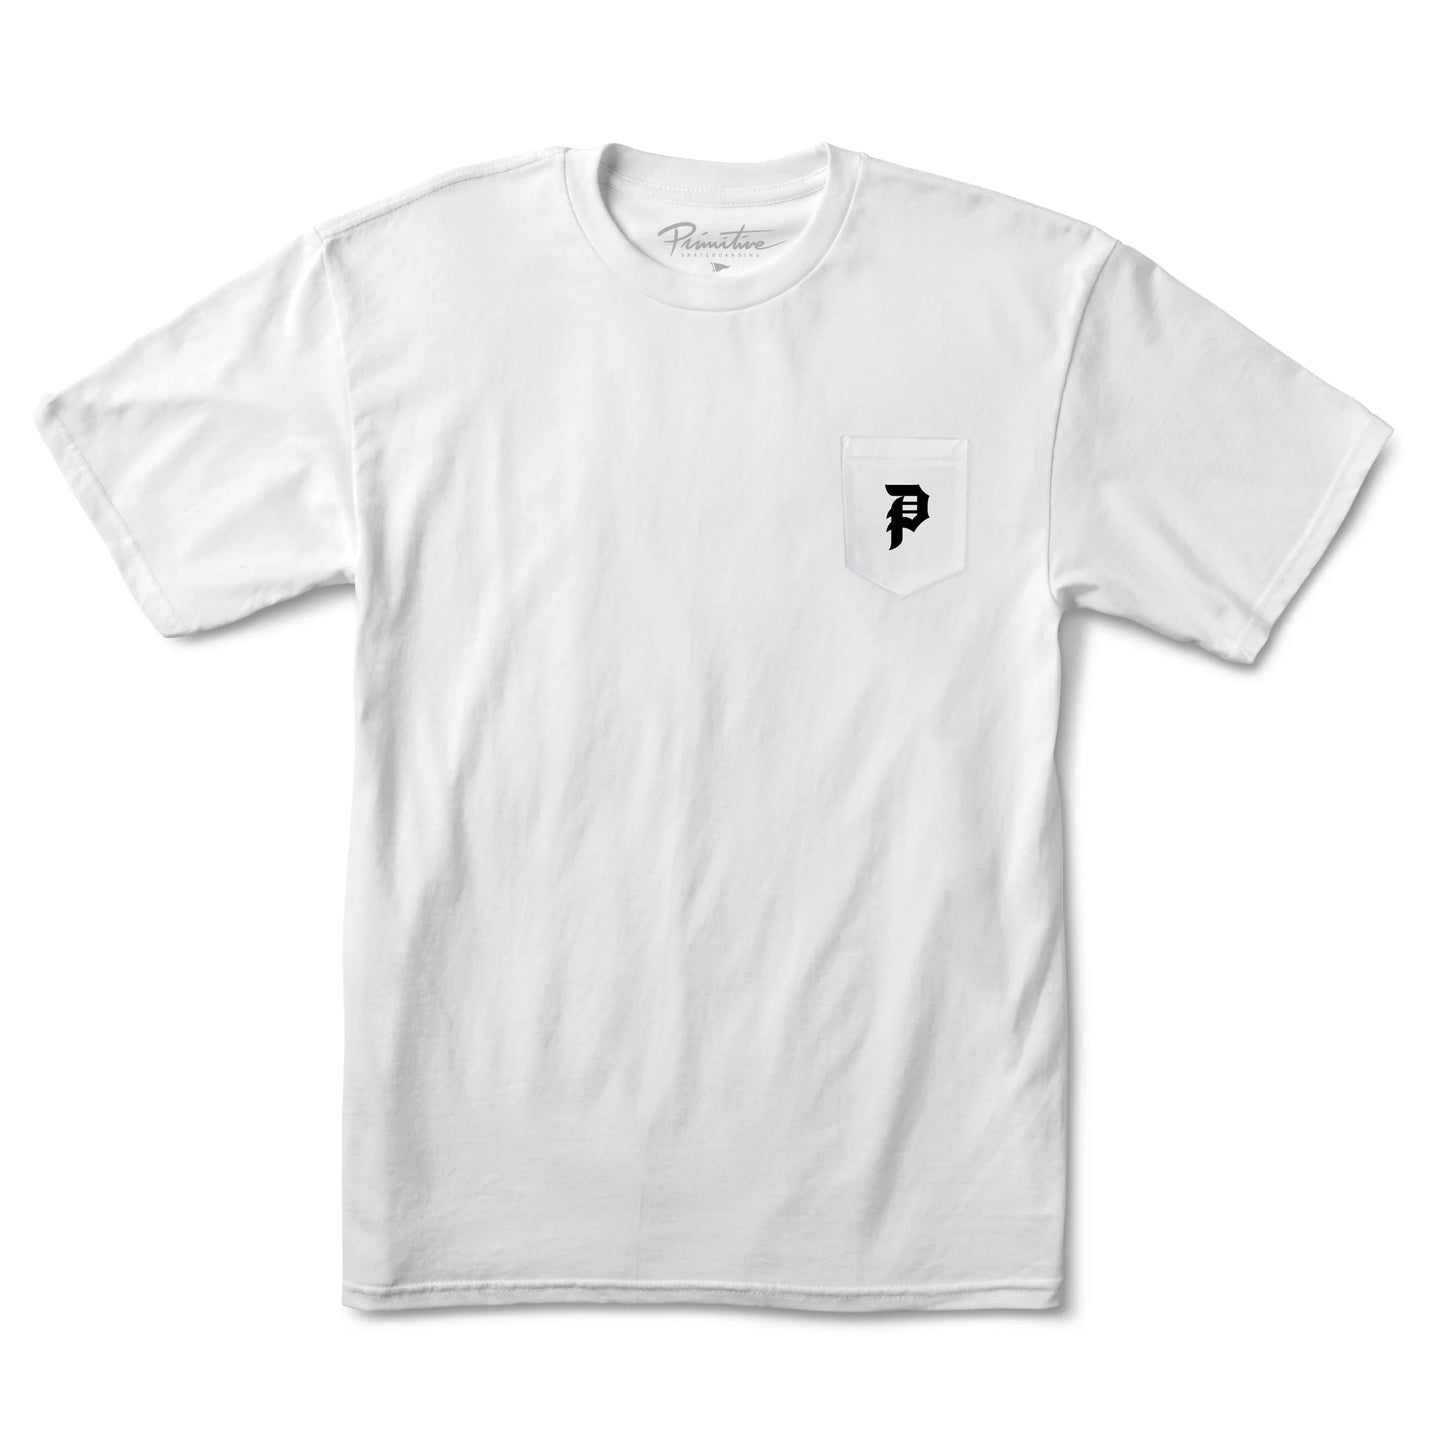 Primitive Goodbye Pocket Tee White S/s Shirt